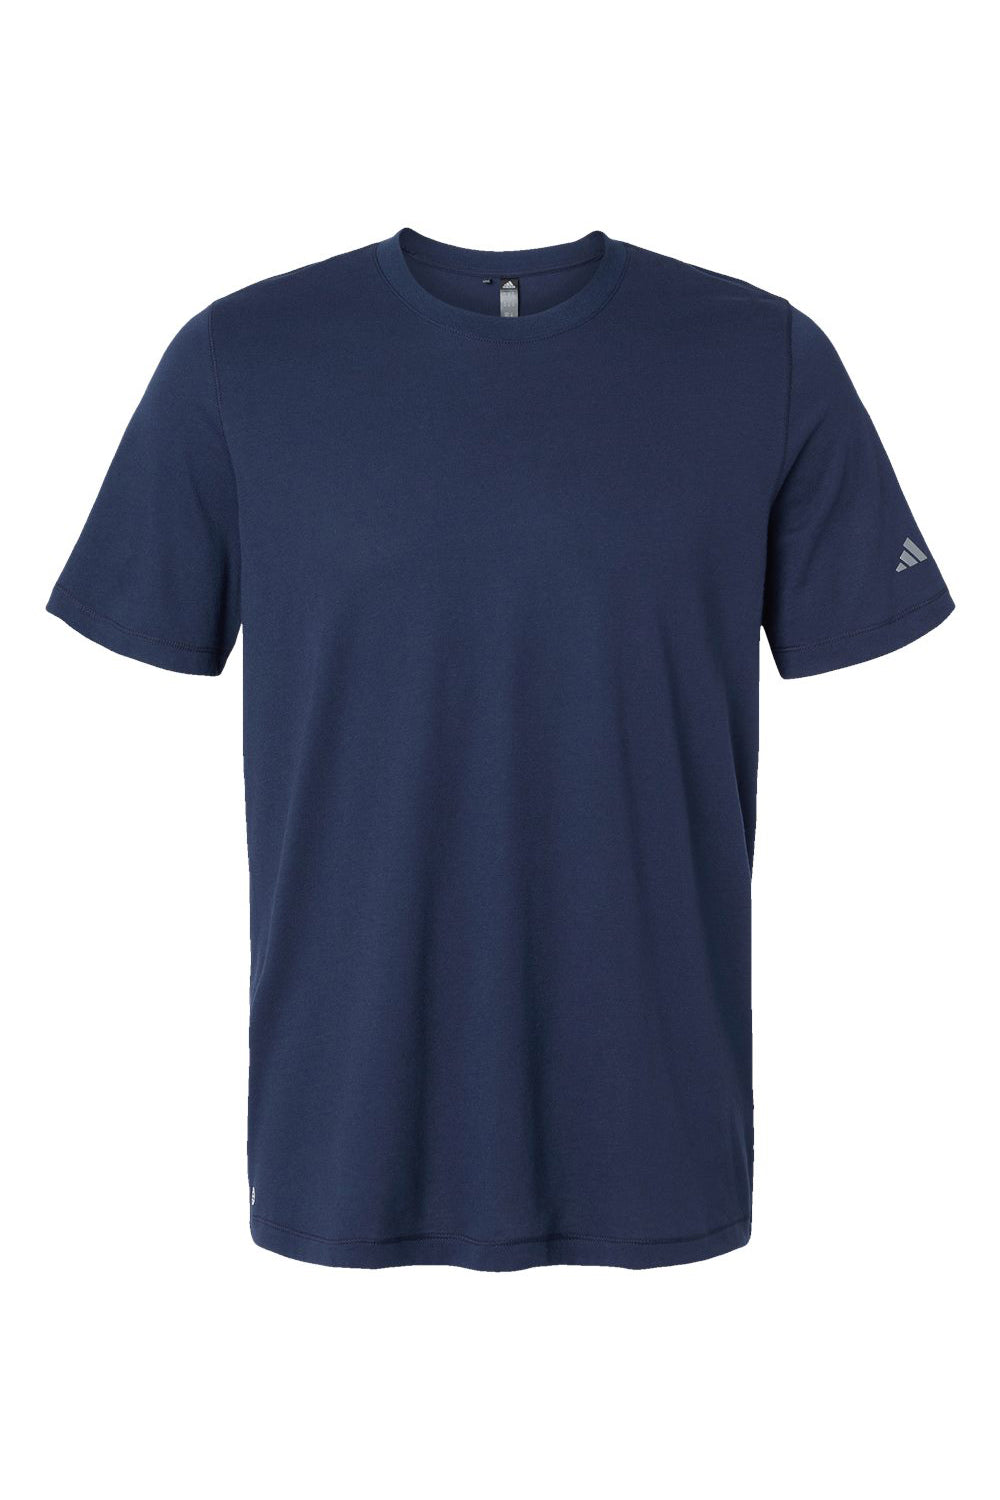 Adidas A556 Mens Short Sleeve Crewneck T-Shirt Collegiate Navy Blue Flat Front